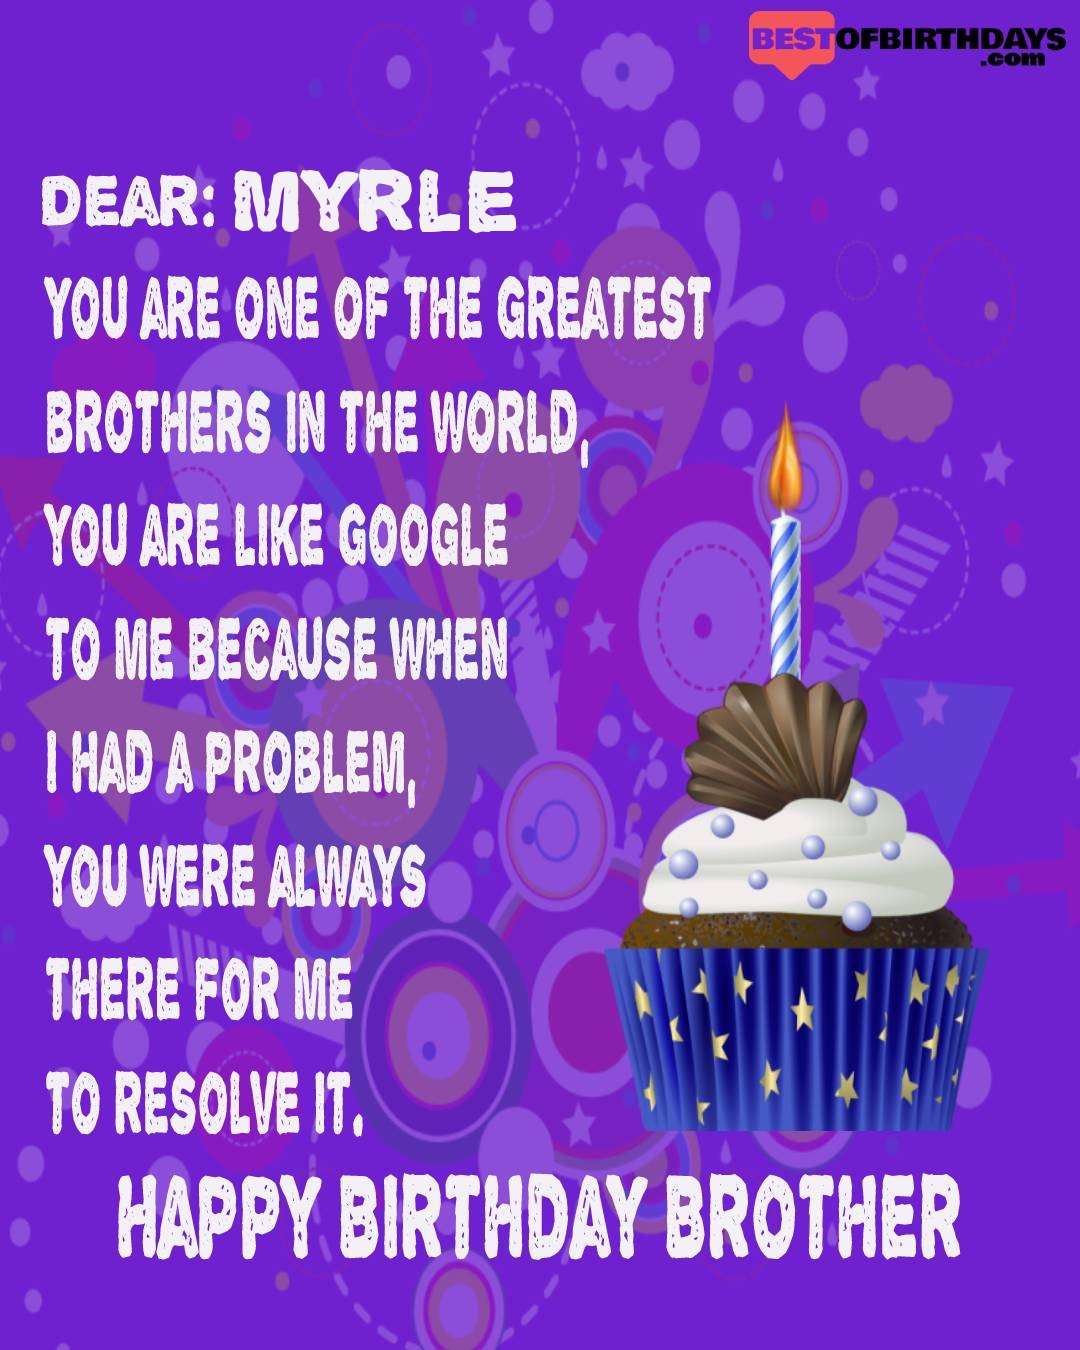 Happy birthday myrle bhai brother bro